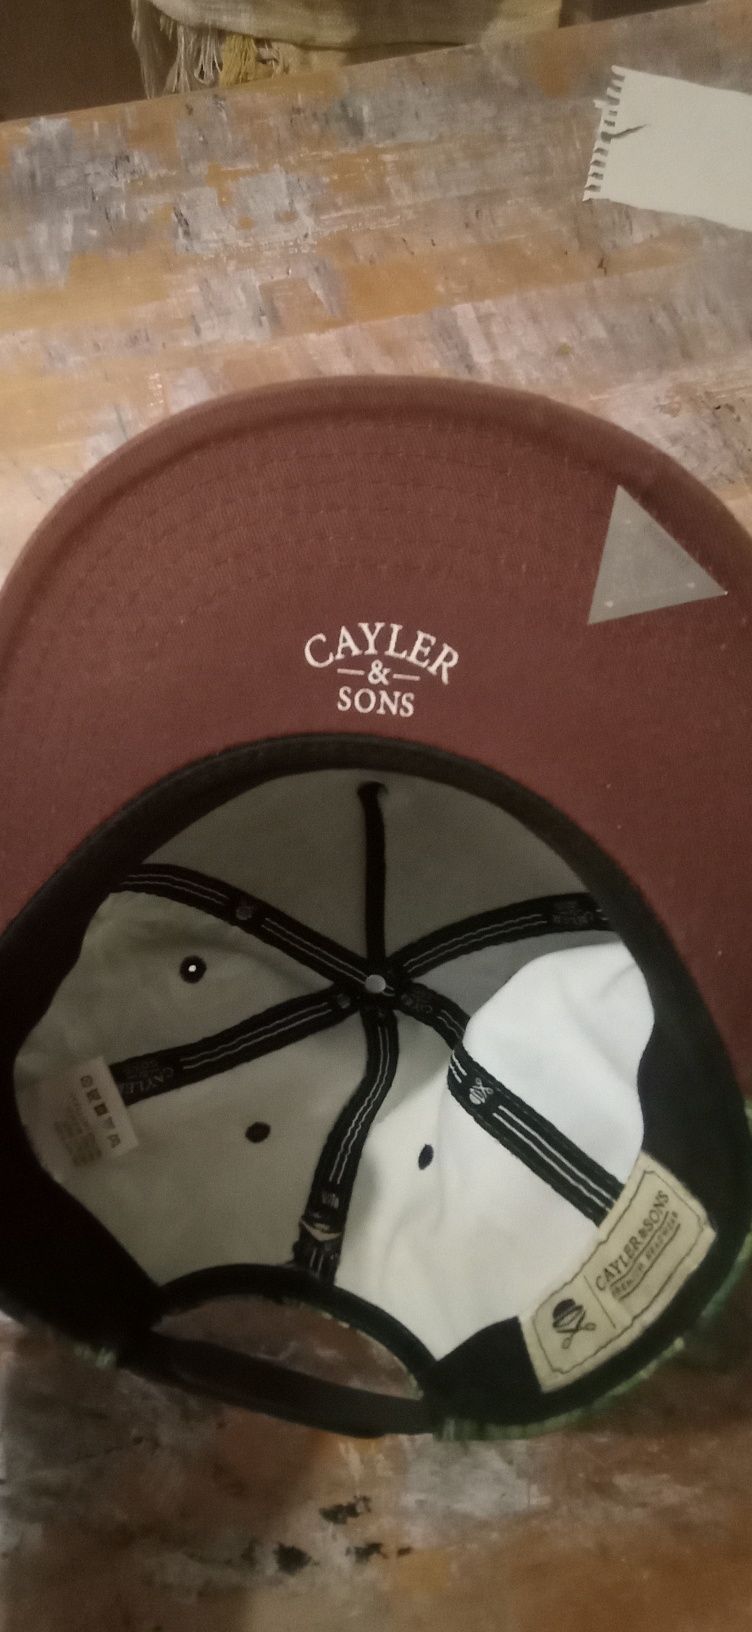 Cayler & sons czapka